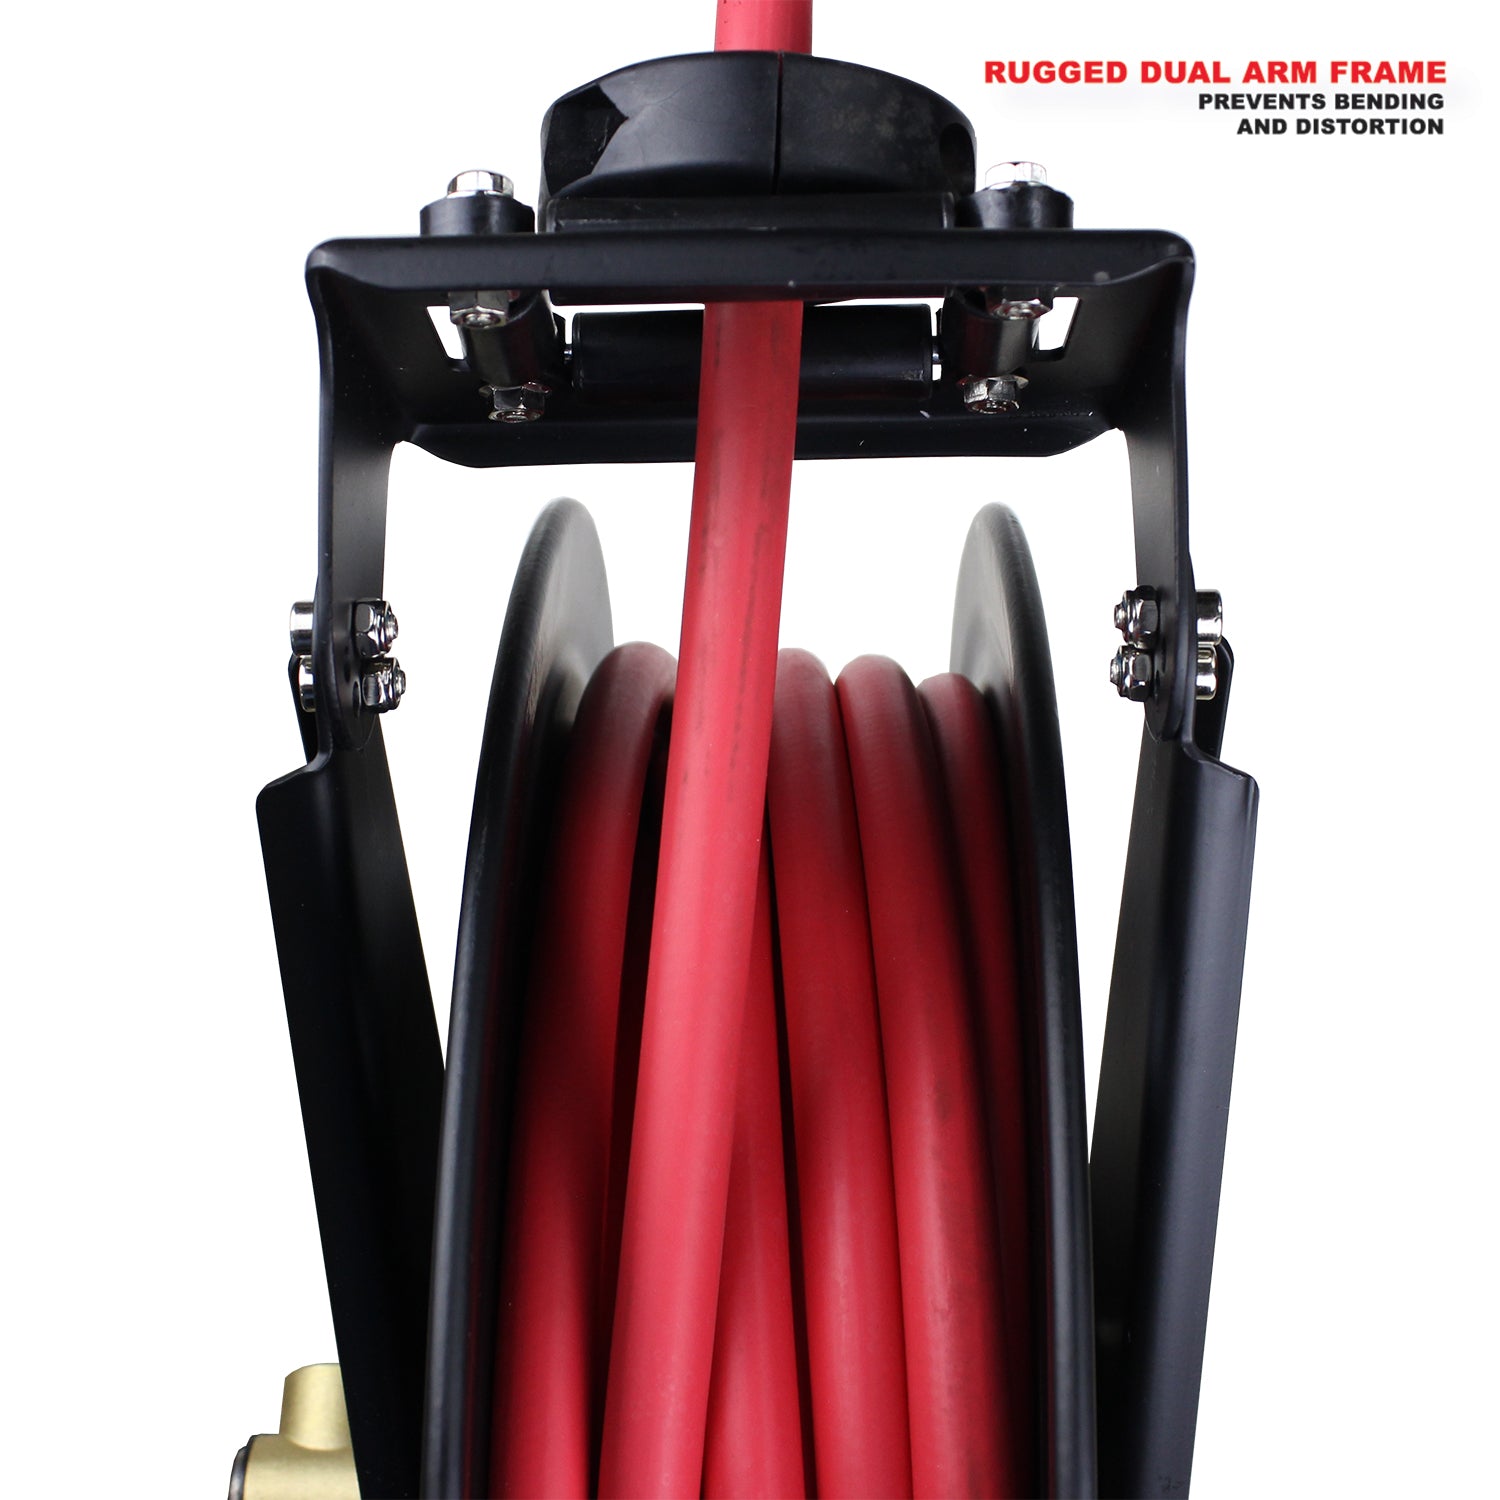 Hose reel and cable reel, Manual hose reel - Painted steel hose